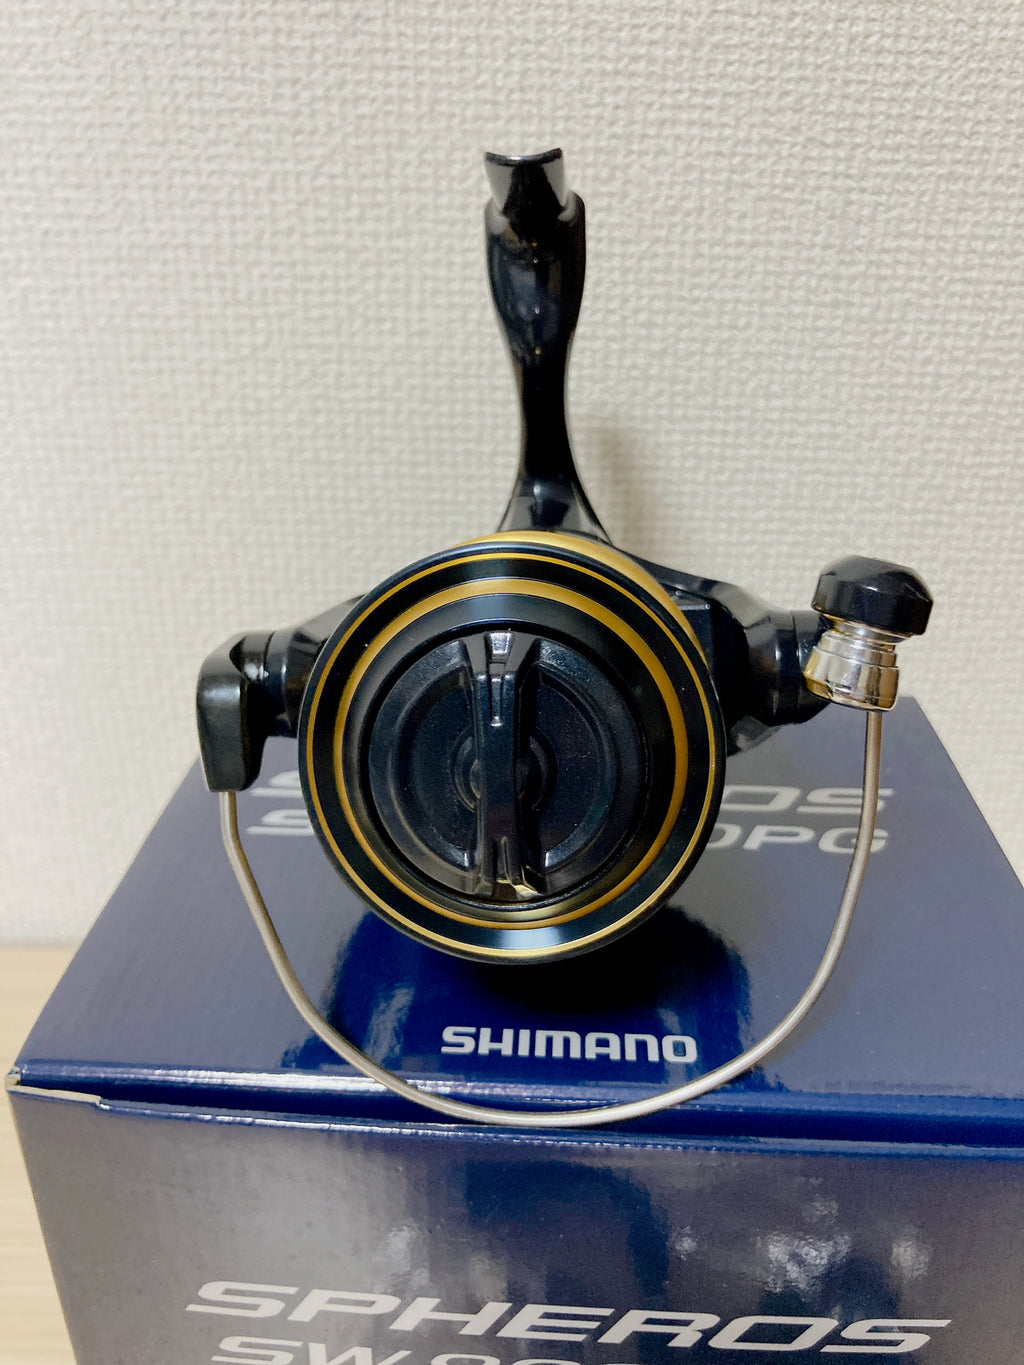 Shimano Spinning Reel 21 Spheros SW 8000PG Gear Ratio 4.9:1 Fishing Re